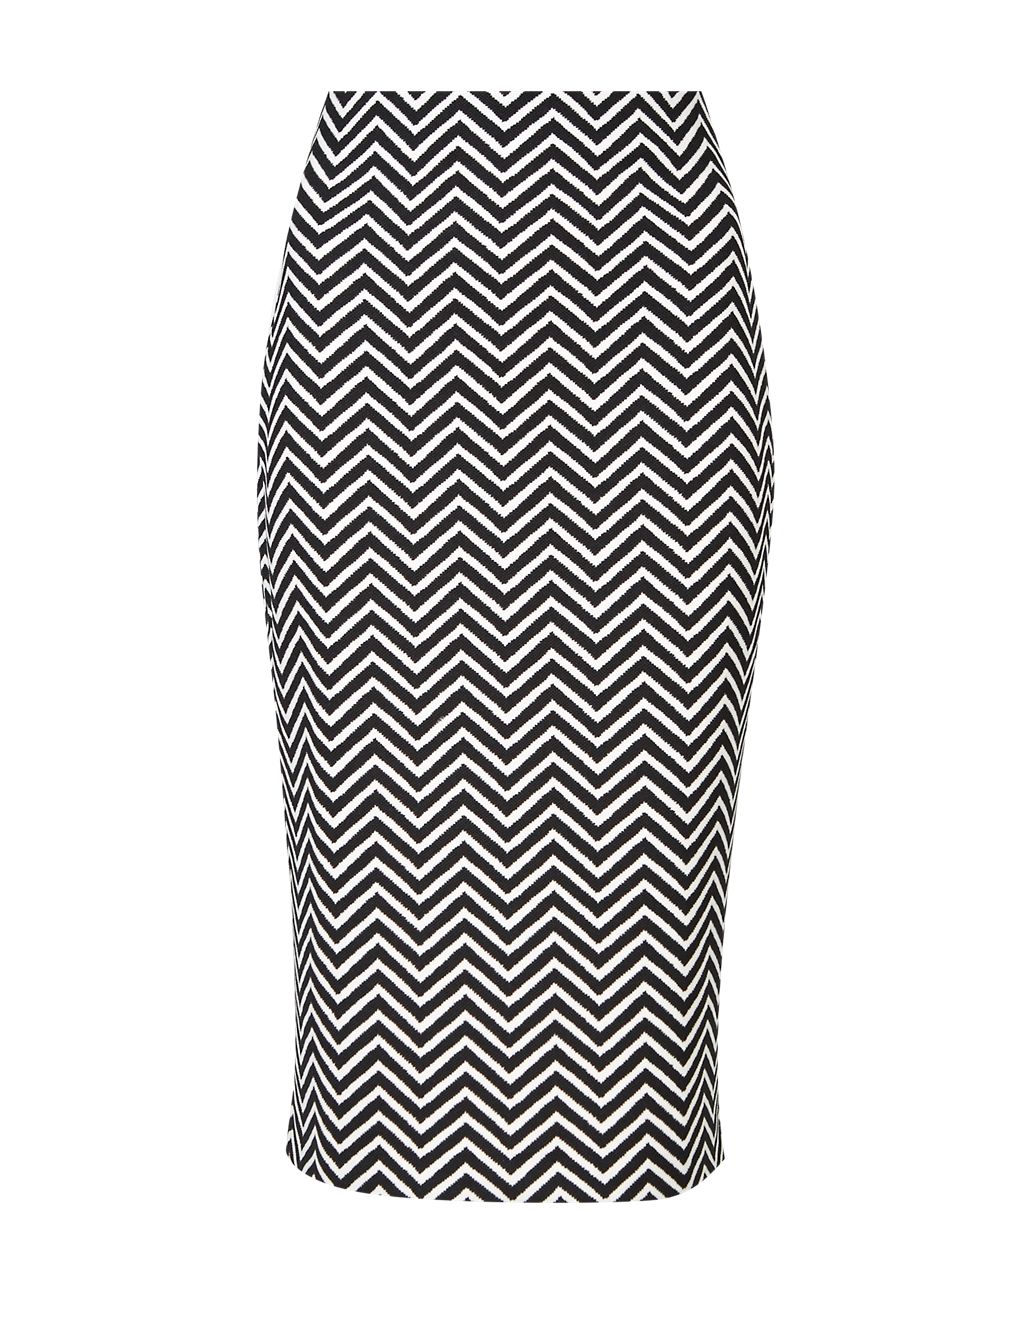 Chevron Print Pencil Skirt 1 of 4